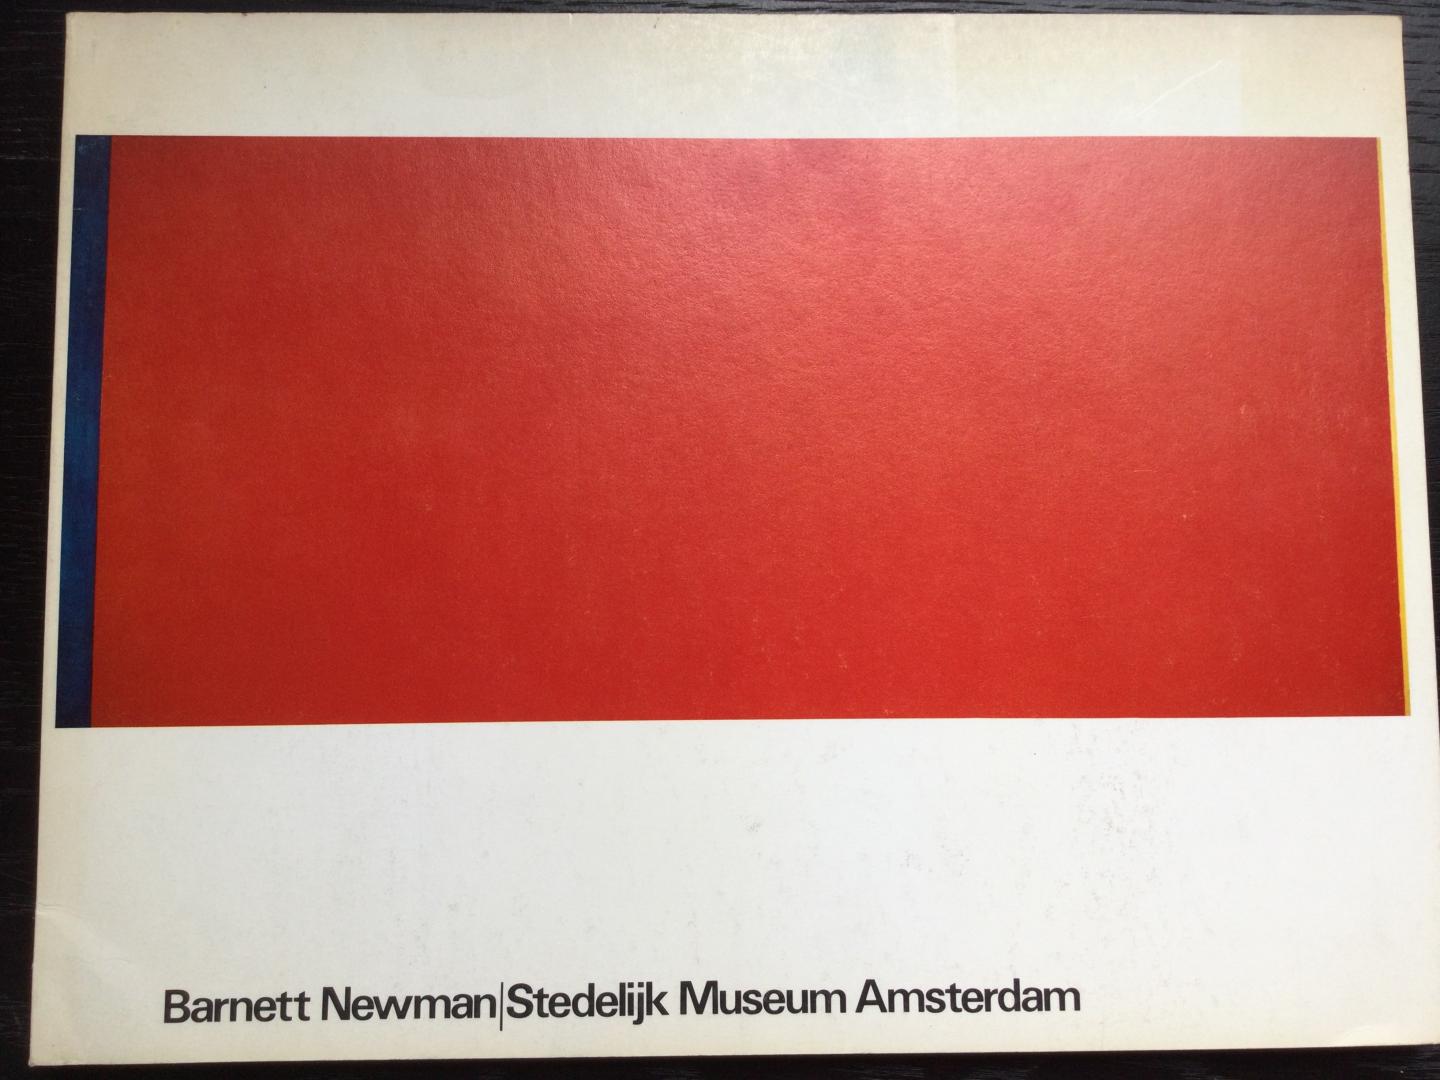 Hess, Thomas, B. - Barnett Newman, Stedelijk museum Amsterdam